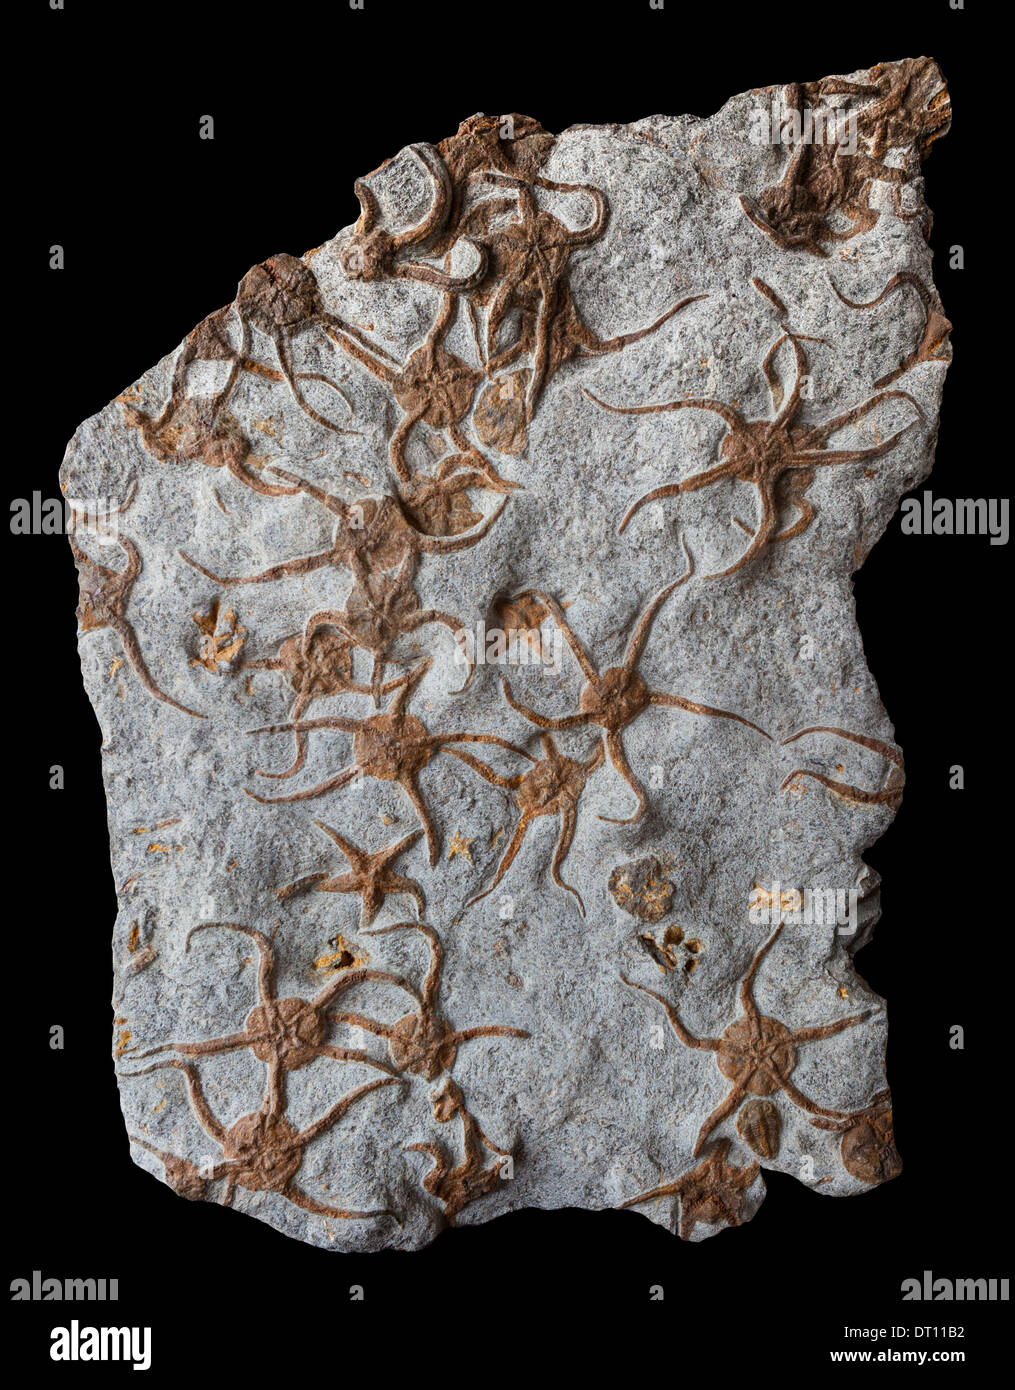 many fossilized brittle starfish Stock Photo